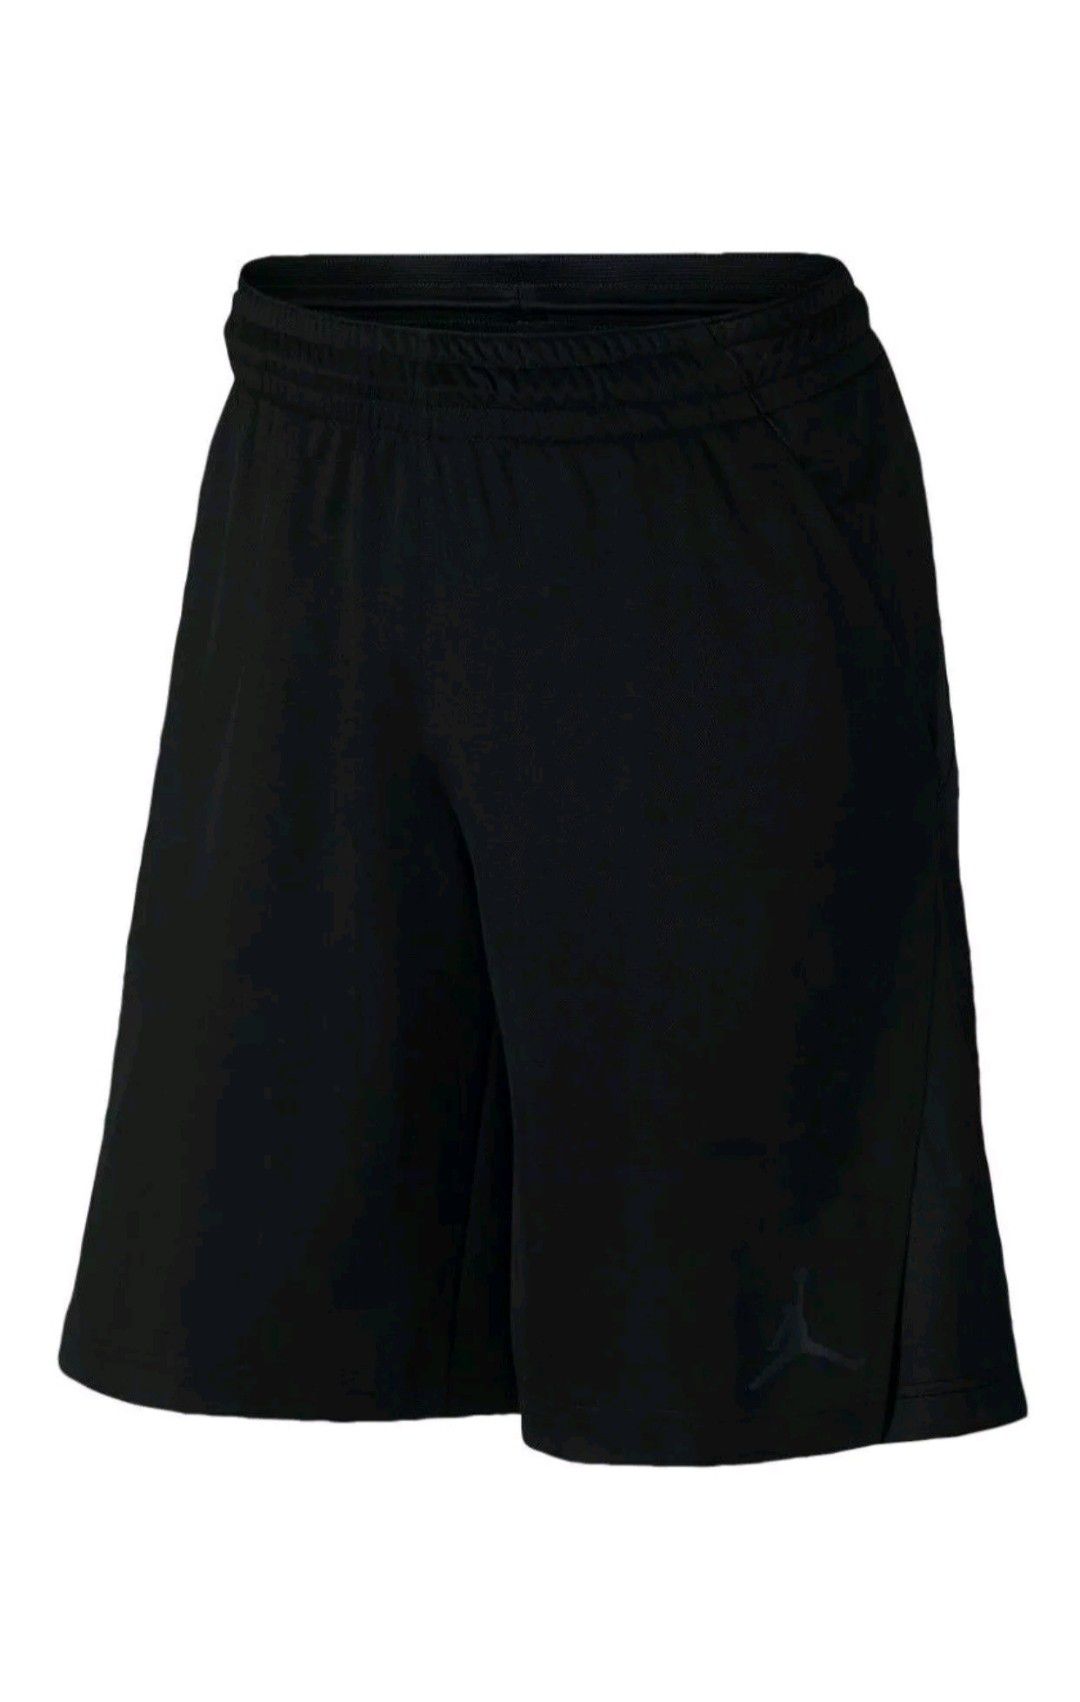 NEW Nike Air Jordan active shorts basketball XXL